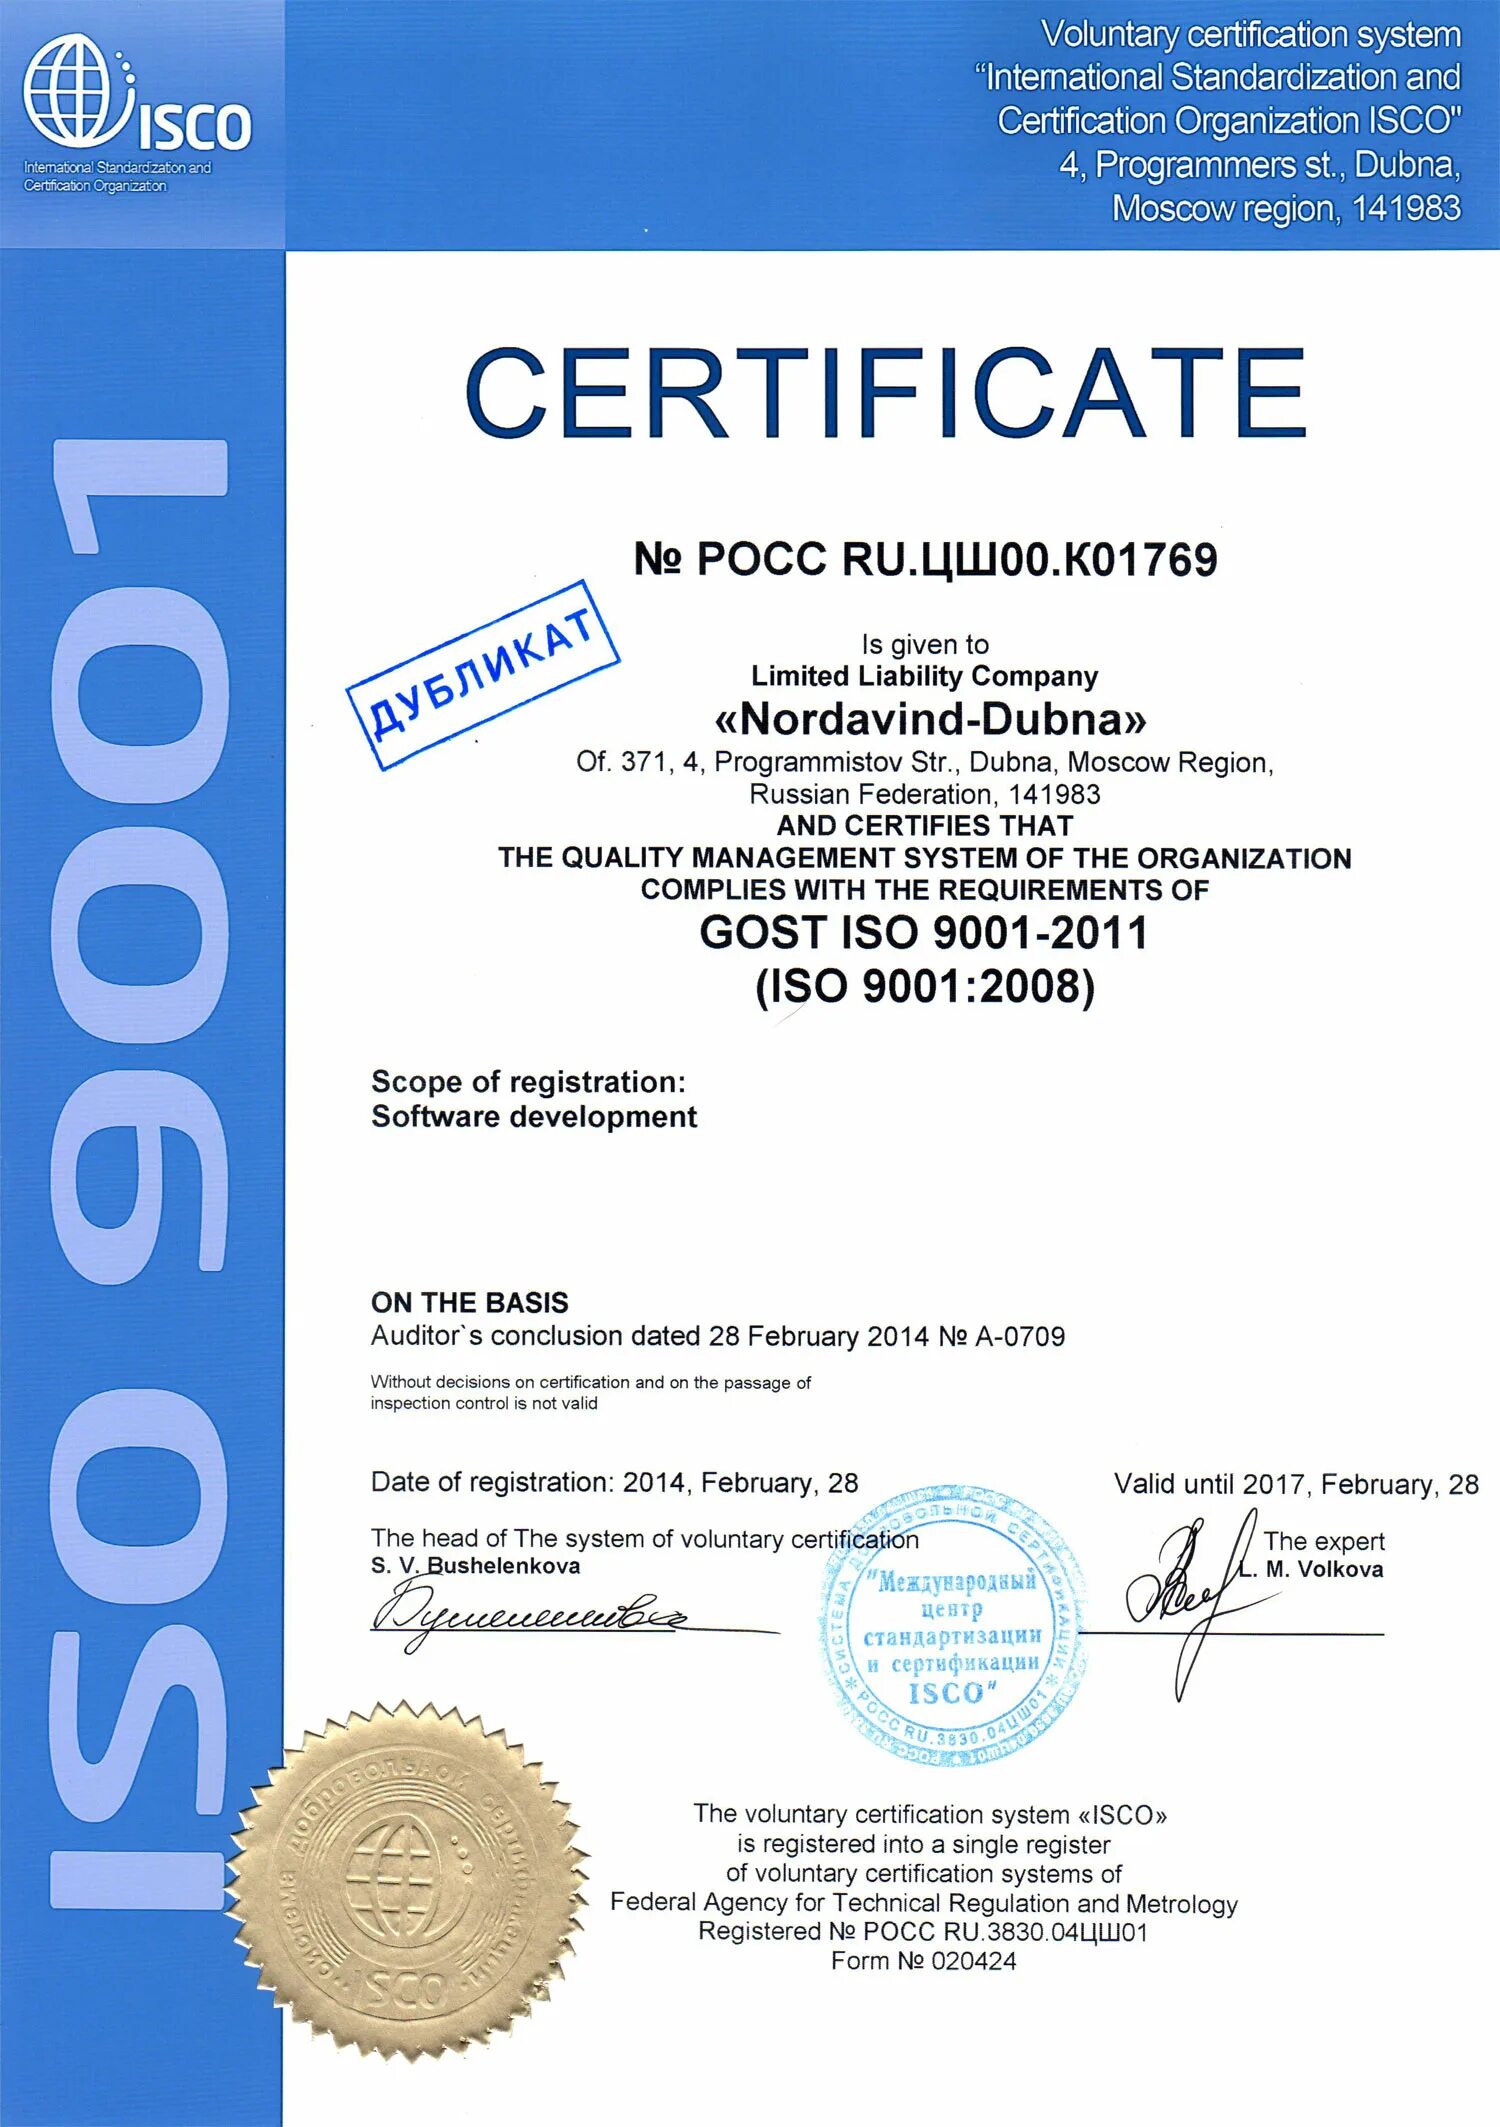 ГОСТ ISO 9001-2011. Сертификат соответствия СМК ISO 9001. ГОСТ ISO 9001-2011 "системы менеджмента качества. Требования".. Сертификат ISO 9001-2011 (ISO 9001:2008). Гост смк 9001